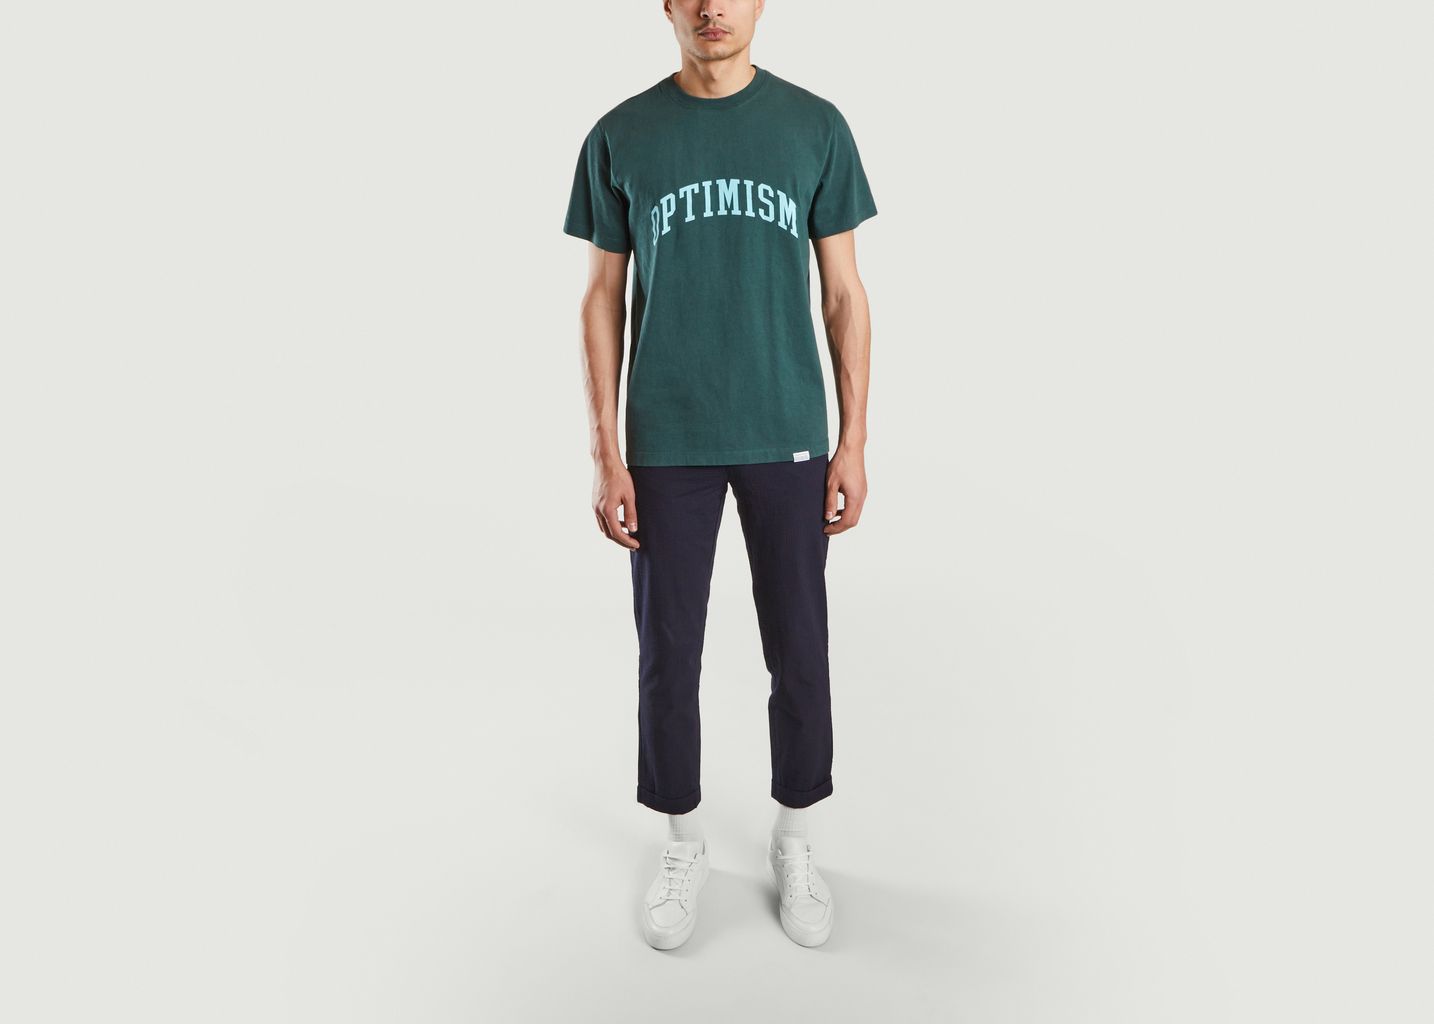 T-shirt imprimé Optimism - Edmmond Studios